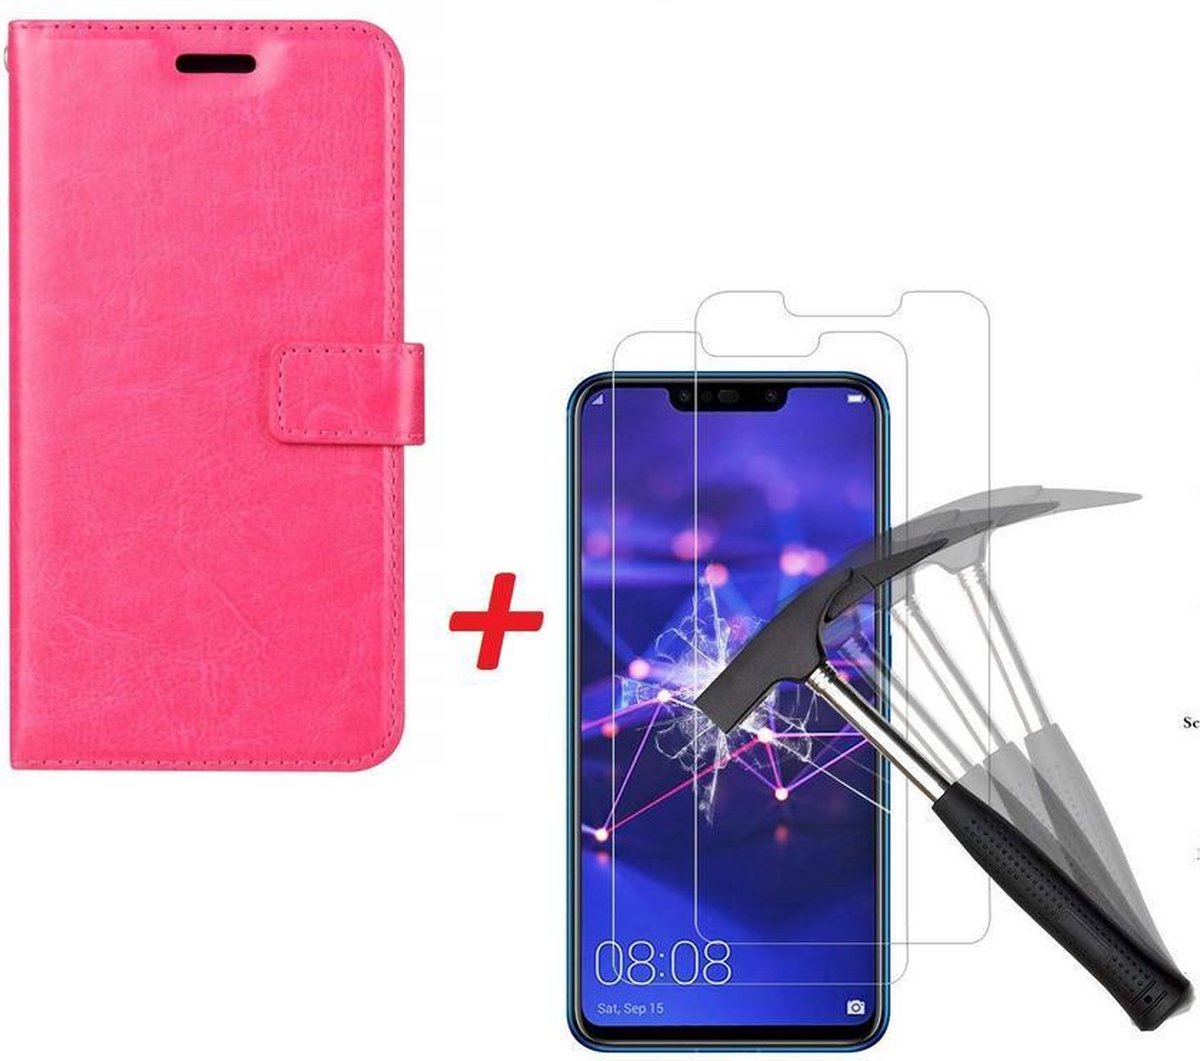 Huawei P Smart Plus (2018) Portemonnee hoesje roze met Tempered Glas Screen protector